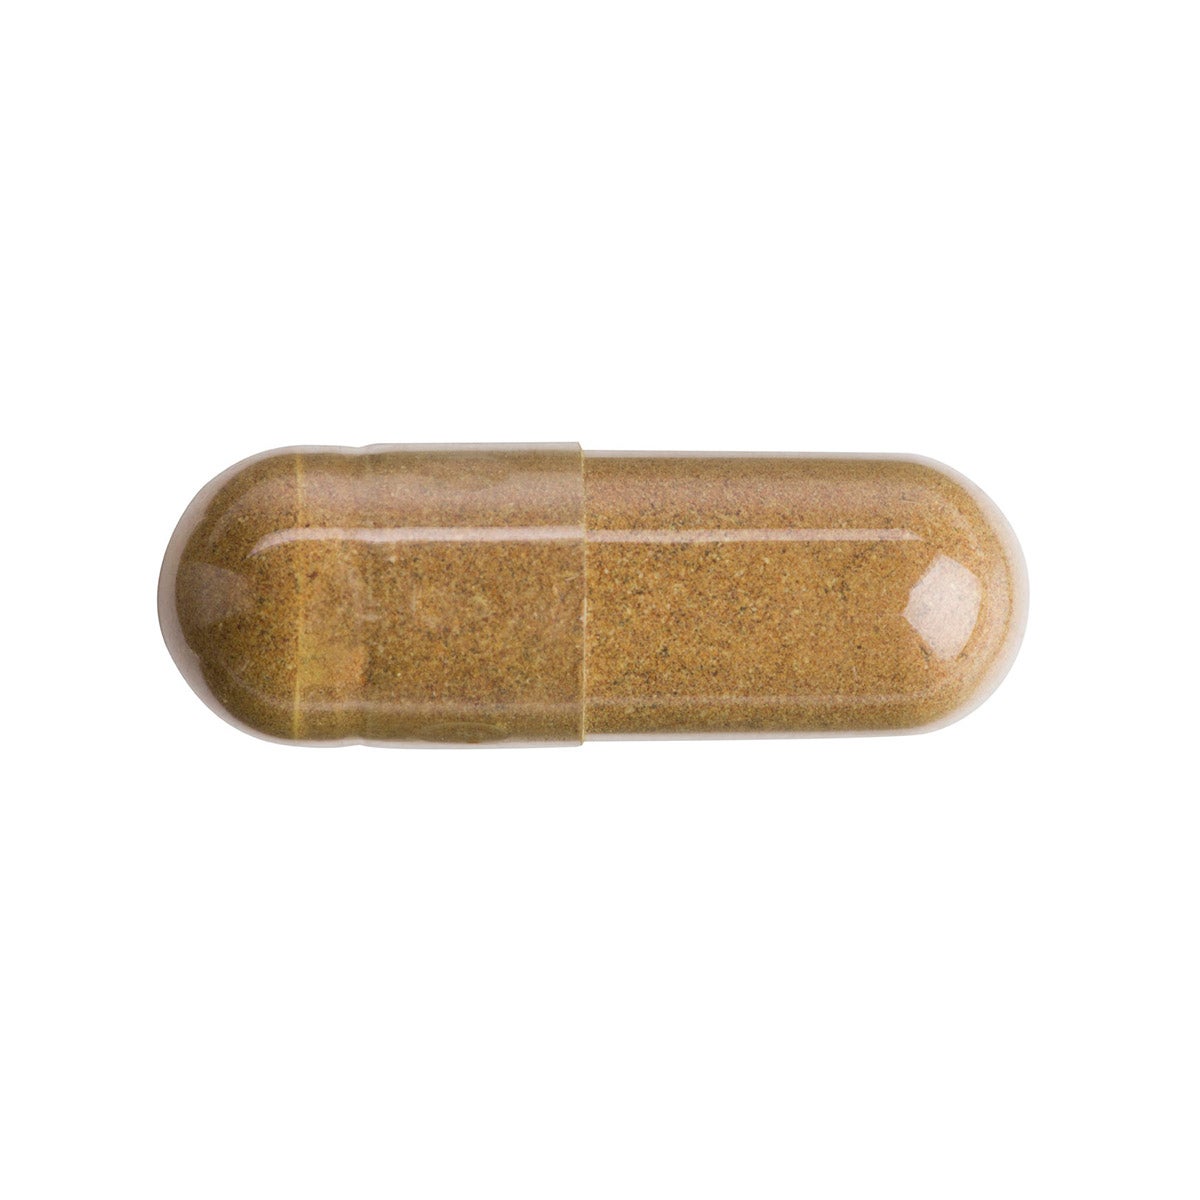 Pharmanex TR90 Complex F pill, botanical food supplement